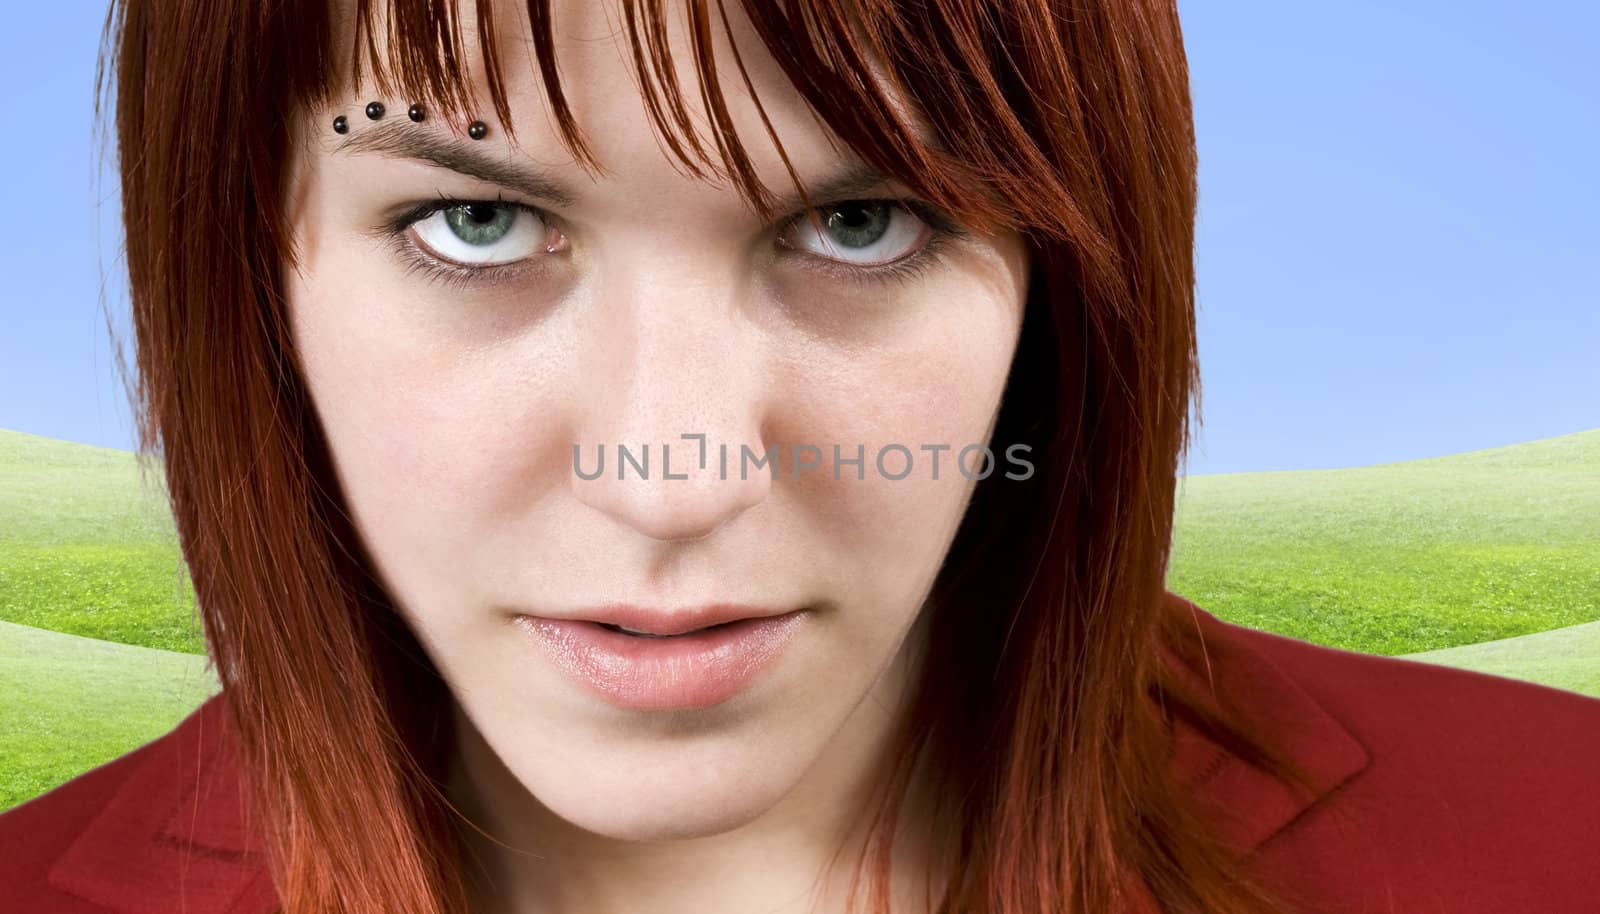 Cute redhead girl aggressively staring at the camera.

Studio shot.